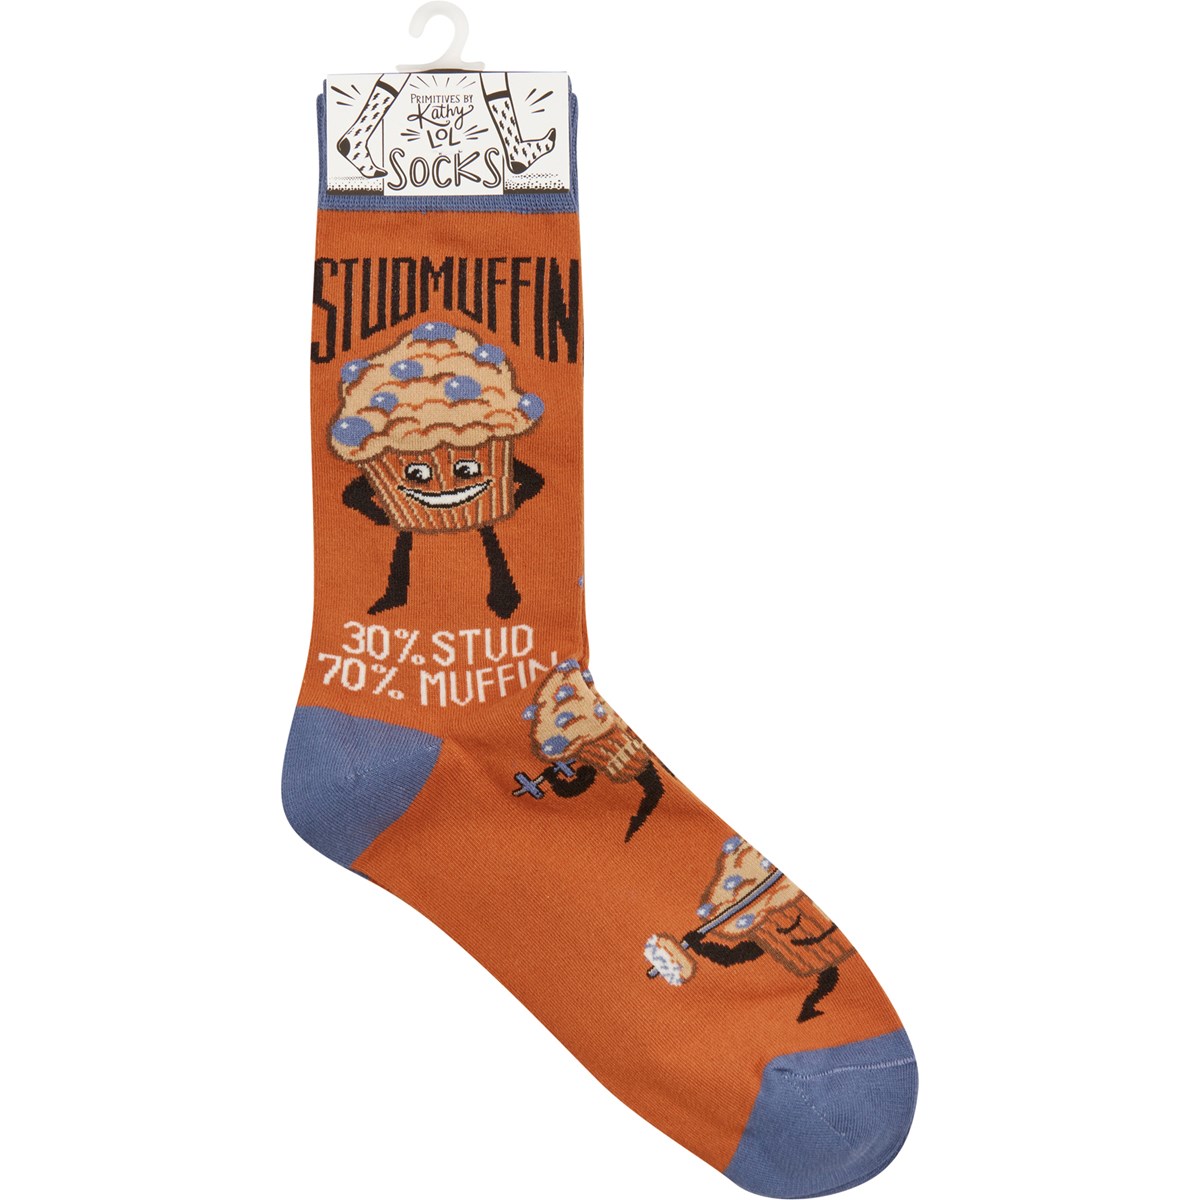 Studmuffin Socks - Cotton, Nylon, Spandex